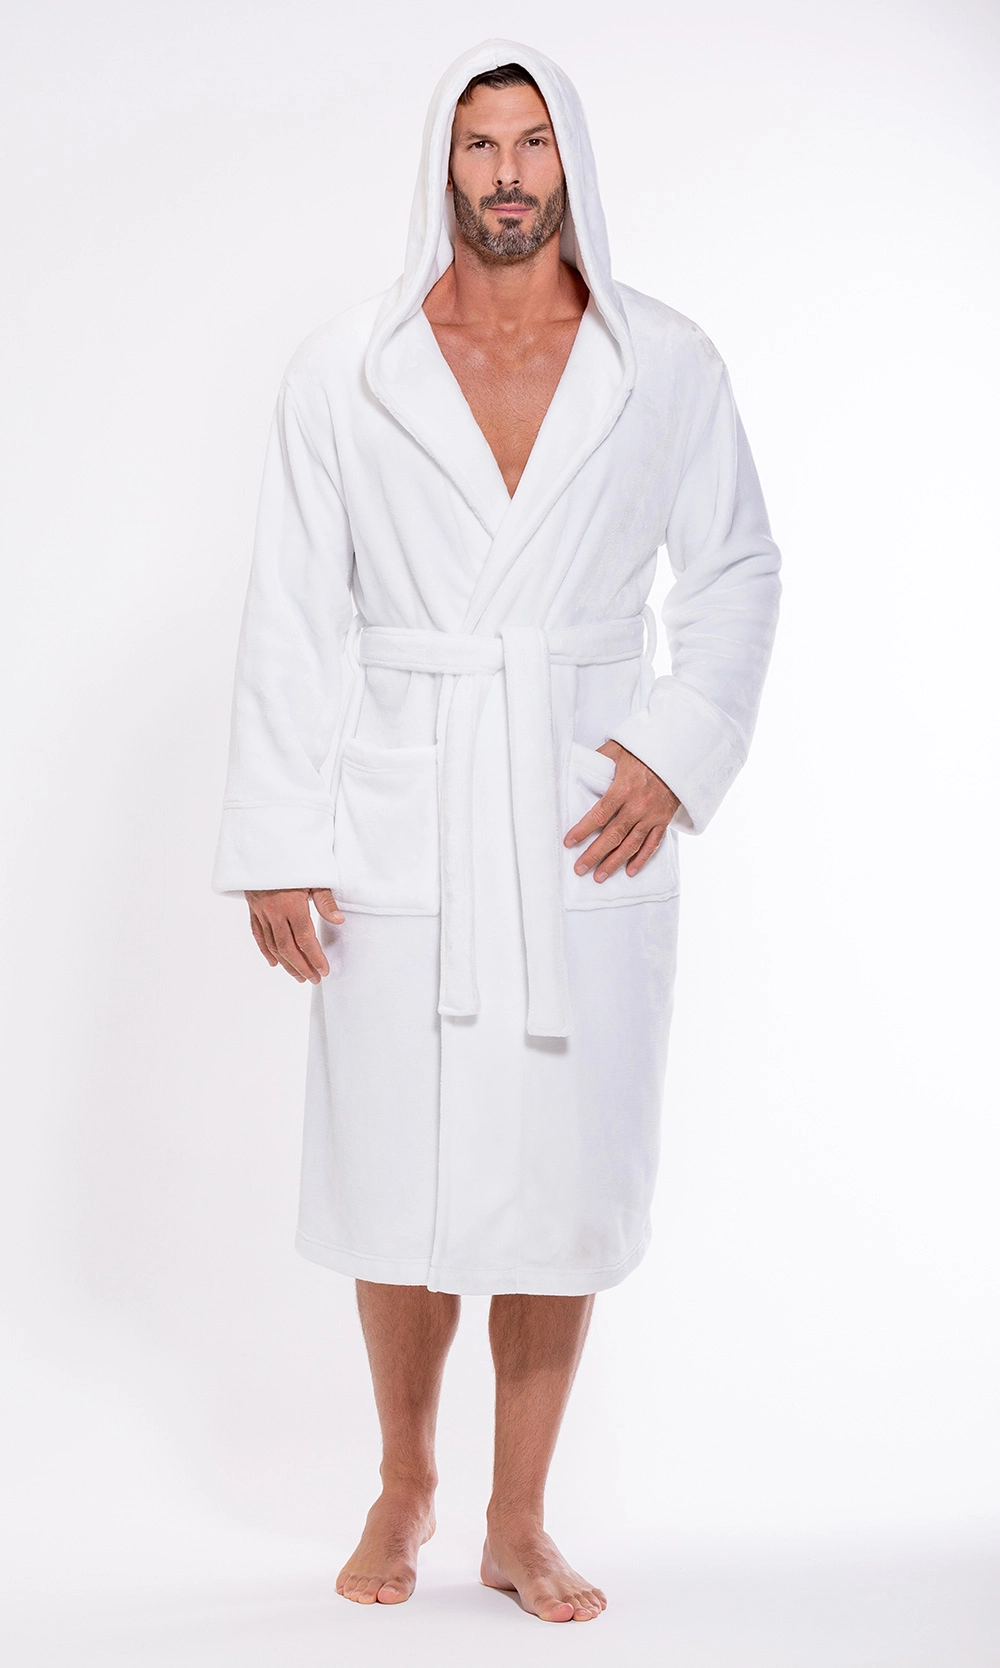 Luxury Bathrobes :: Plush Robes :: Men's White Plush Soft Warm Fleece  Bathrobe with Hood, Comfy Men's Robe - Wholesale bathrobes, Spa robes, Kids  robes, Cotton robes, Spa Slippers, Wholesale Towels